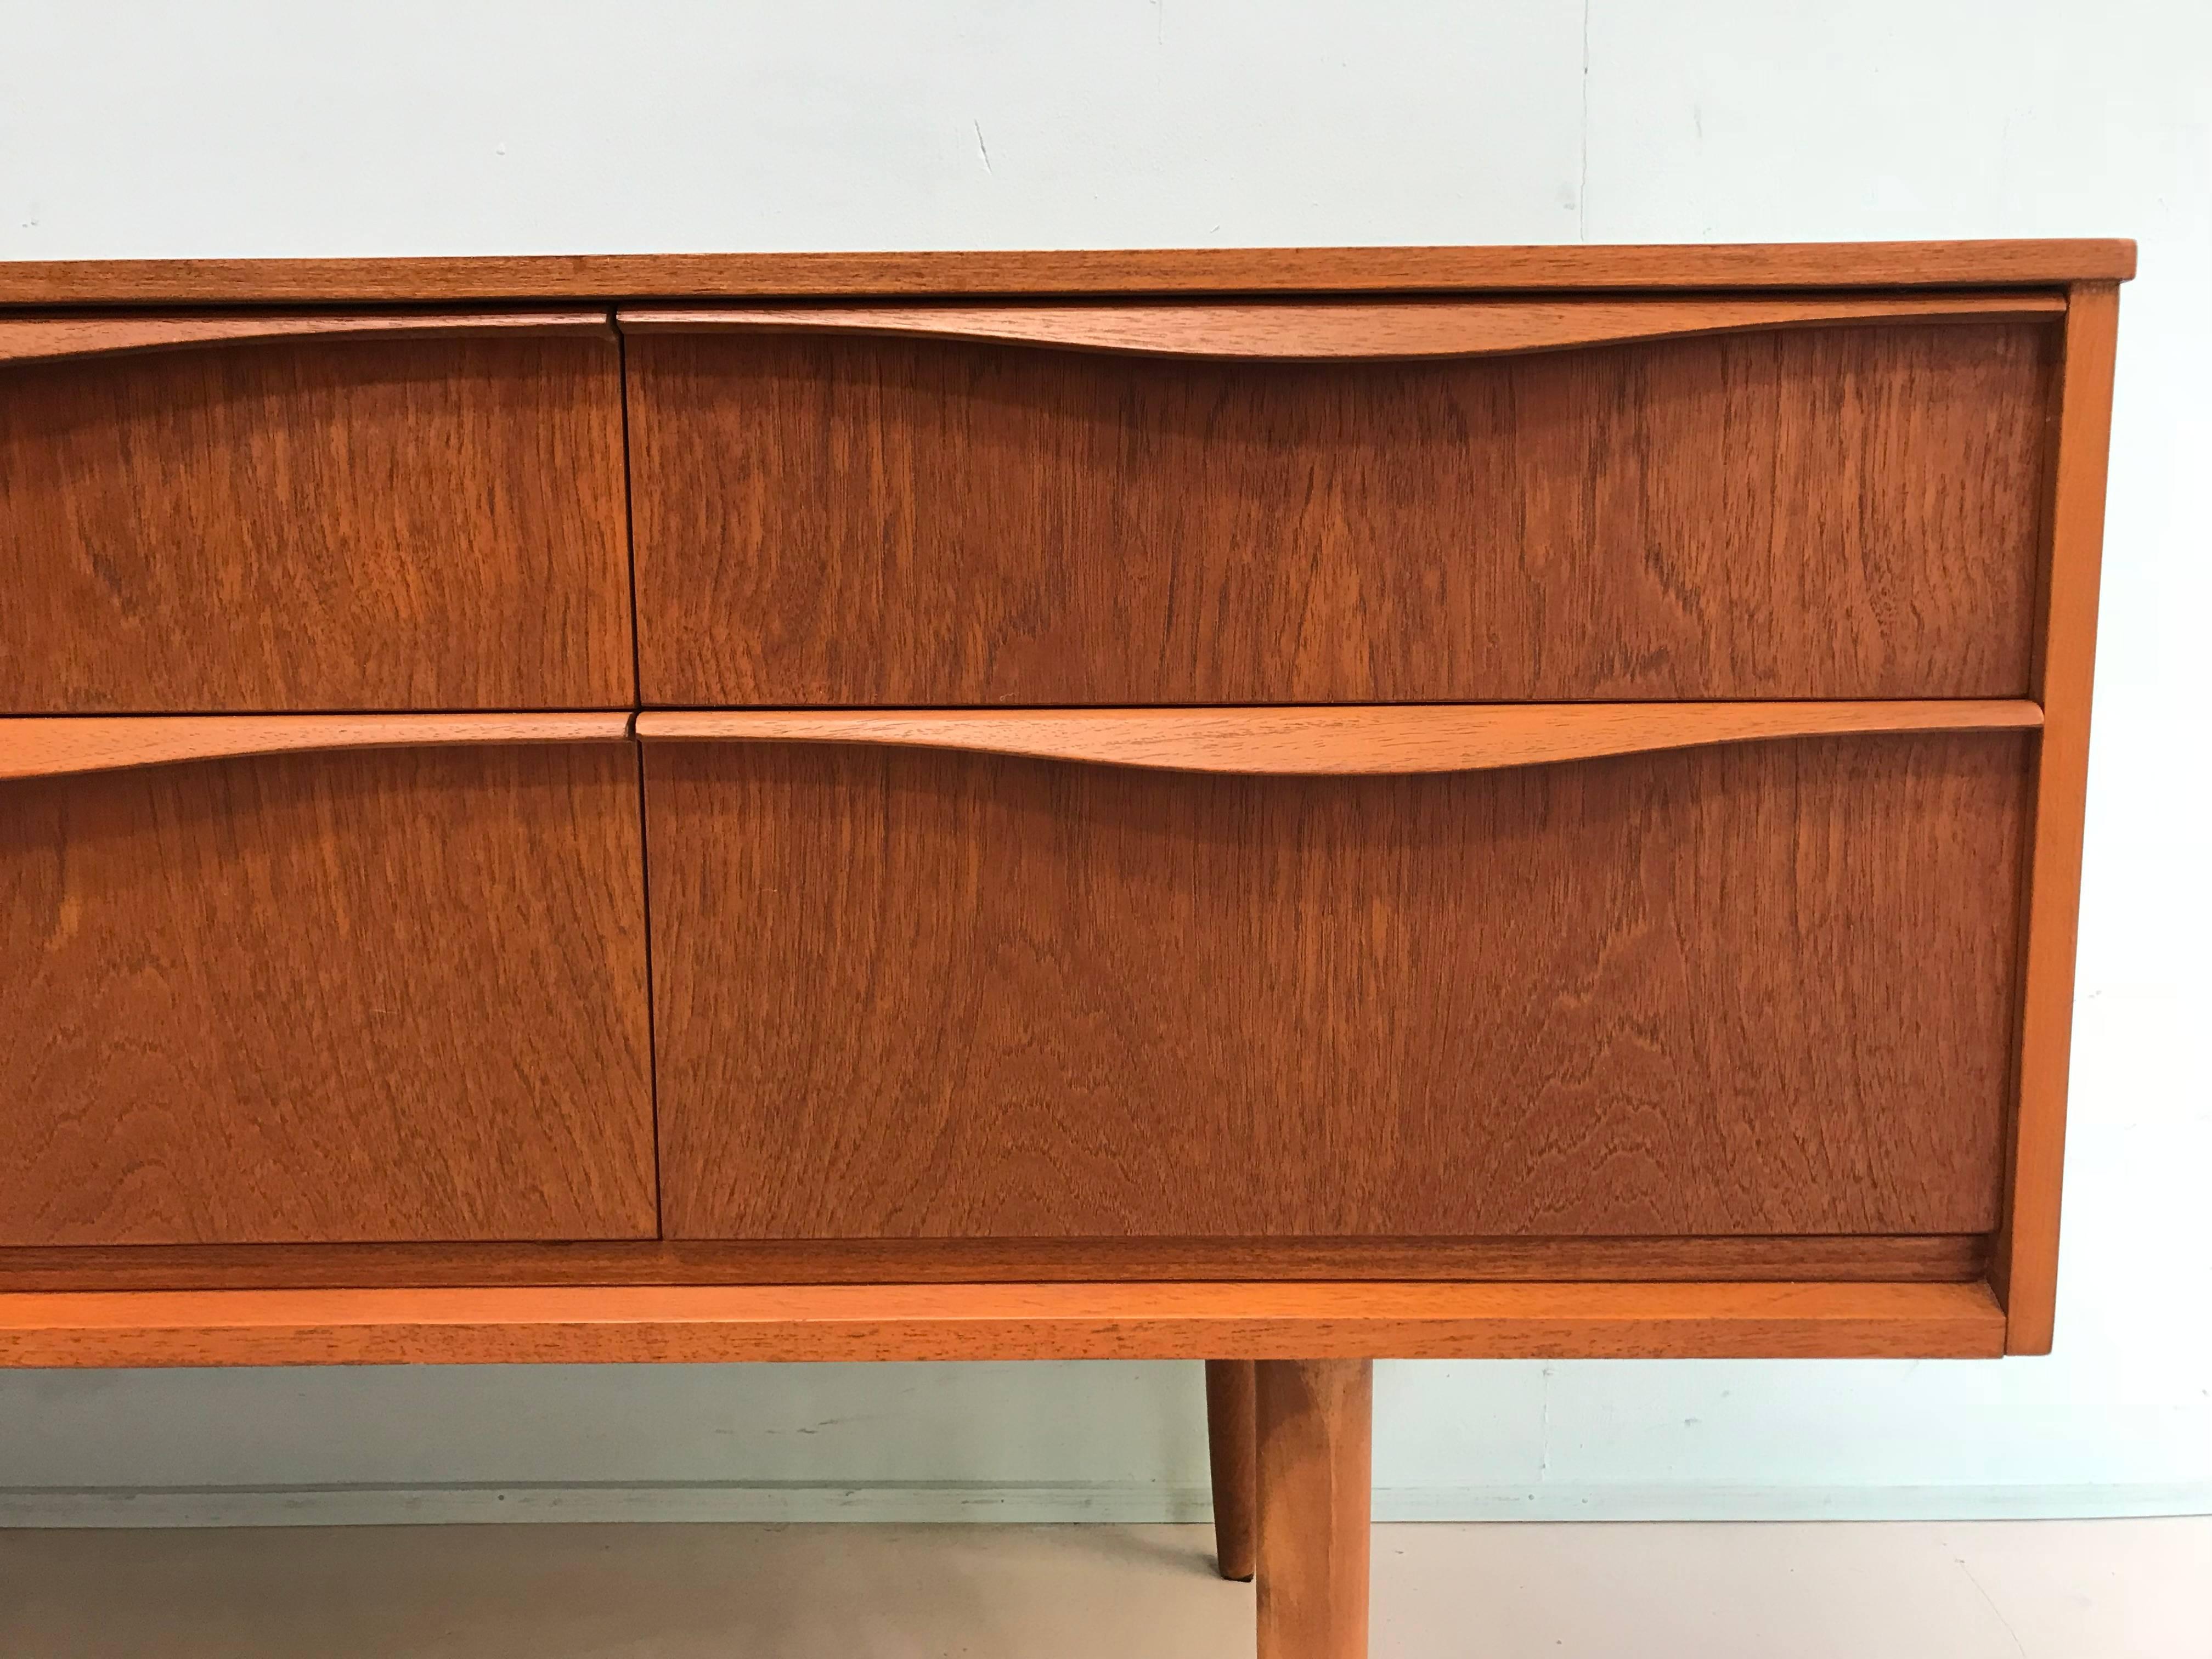 Six drawer dresser teak period 1960s England design by Frank Guille.
Condition: very good.
Measurements:
145 cm W, 42 cm D, 66 cm H.
Itemnr: 238.